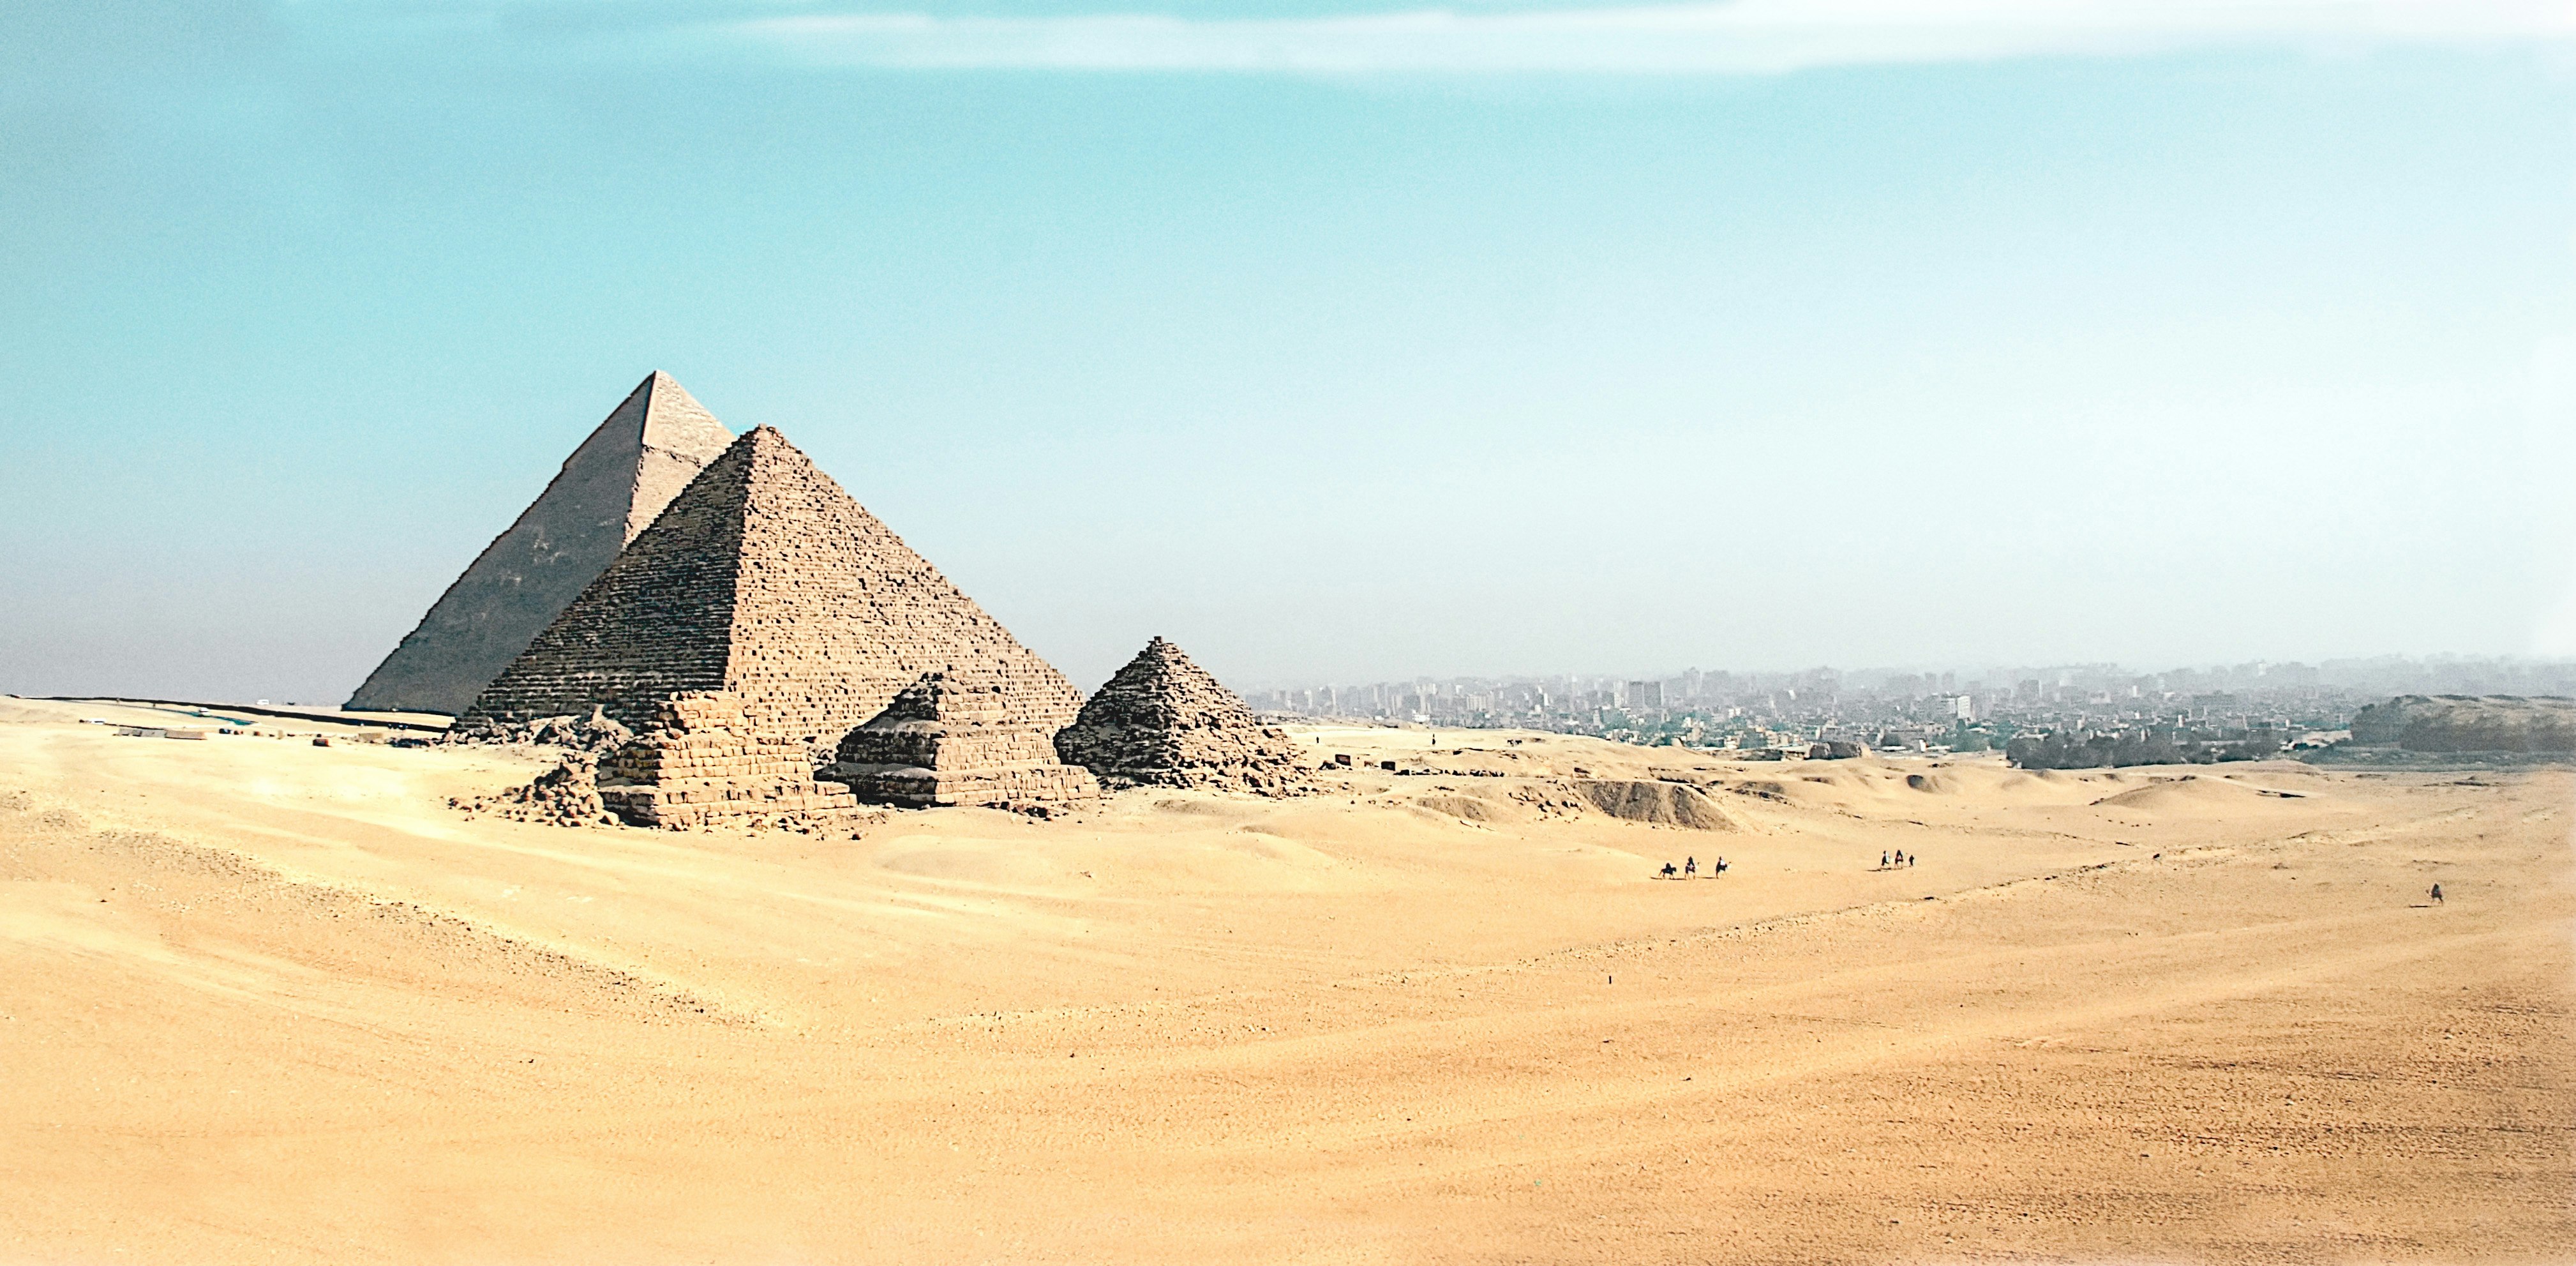 Pyramid of Giza during daytime